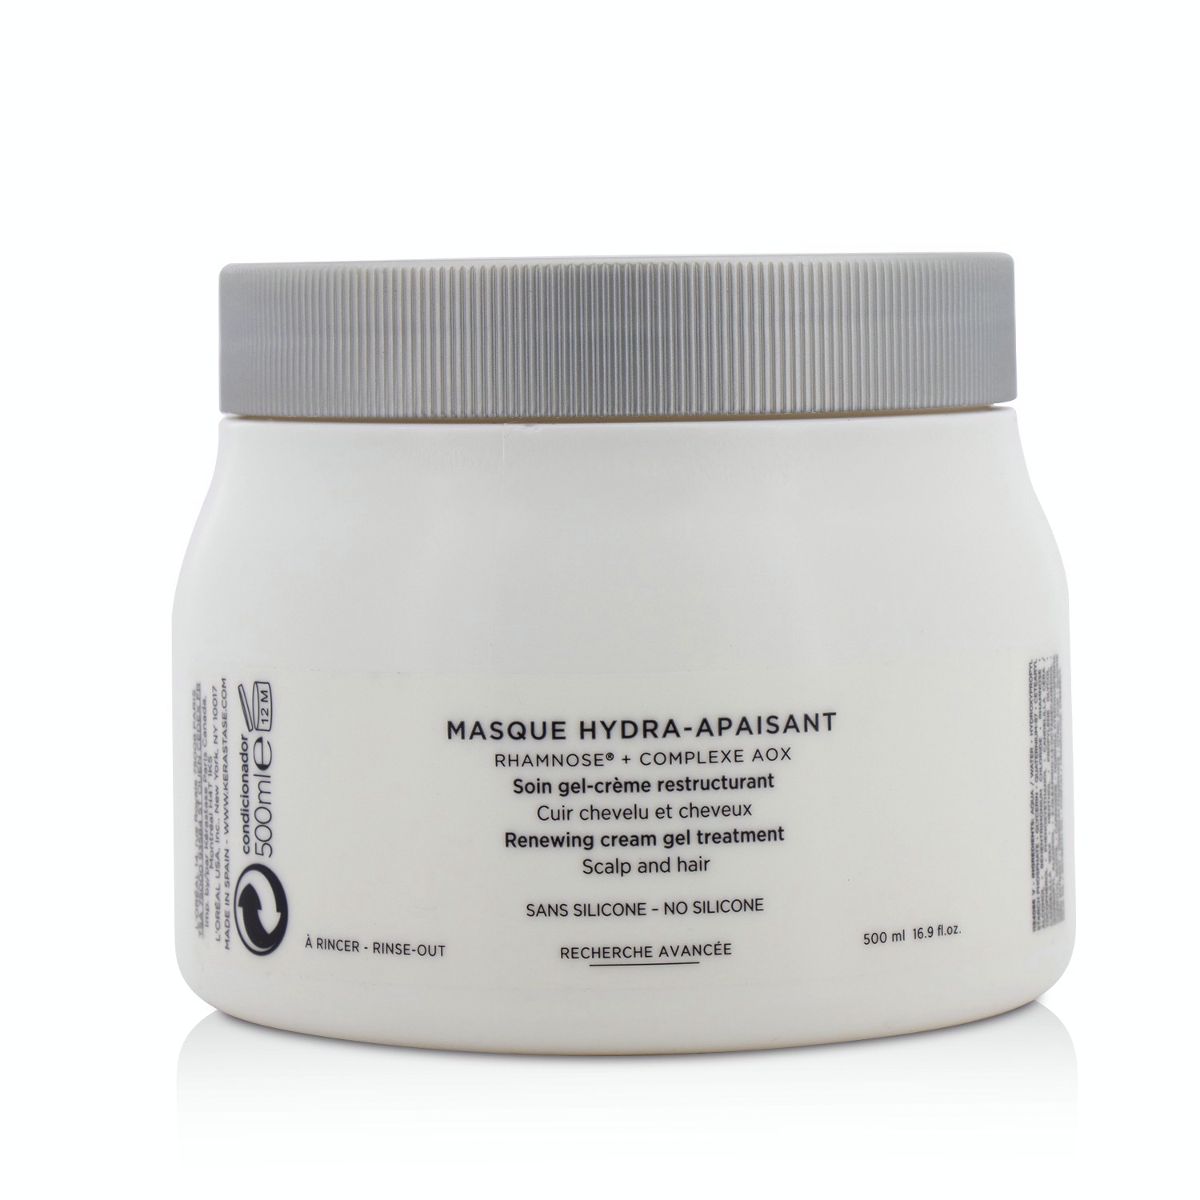 Specifique Masque Hydra-Apaisant Renewing Cream Gel Treatment (Scalp and Hair) Kerastase Image